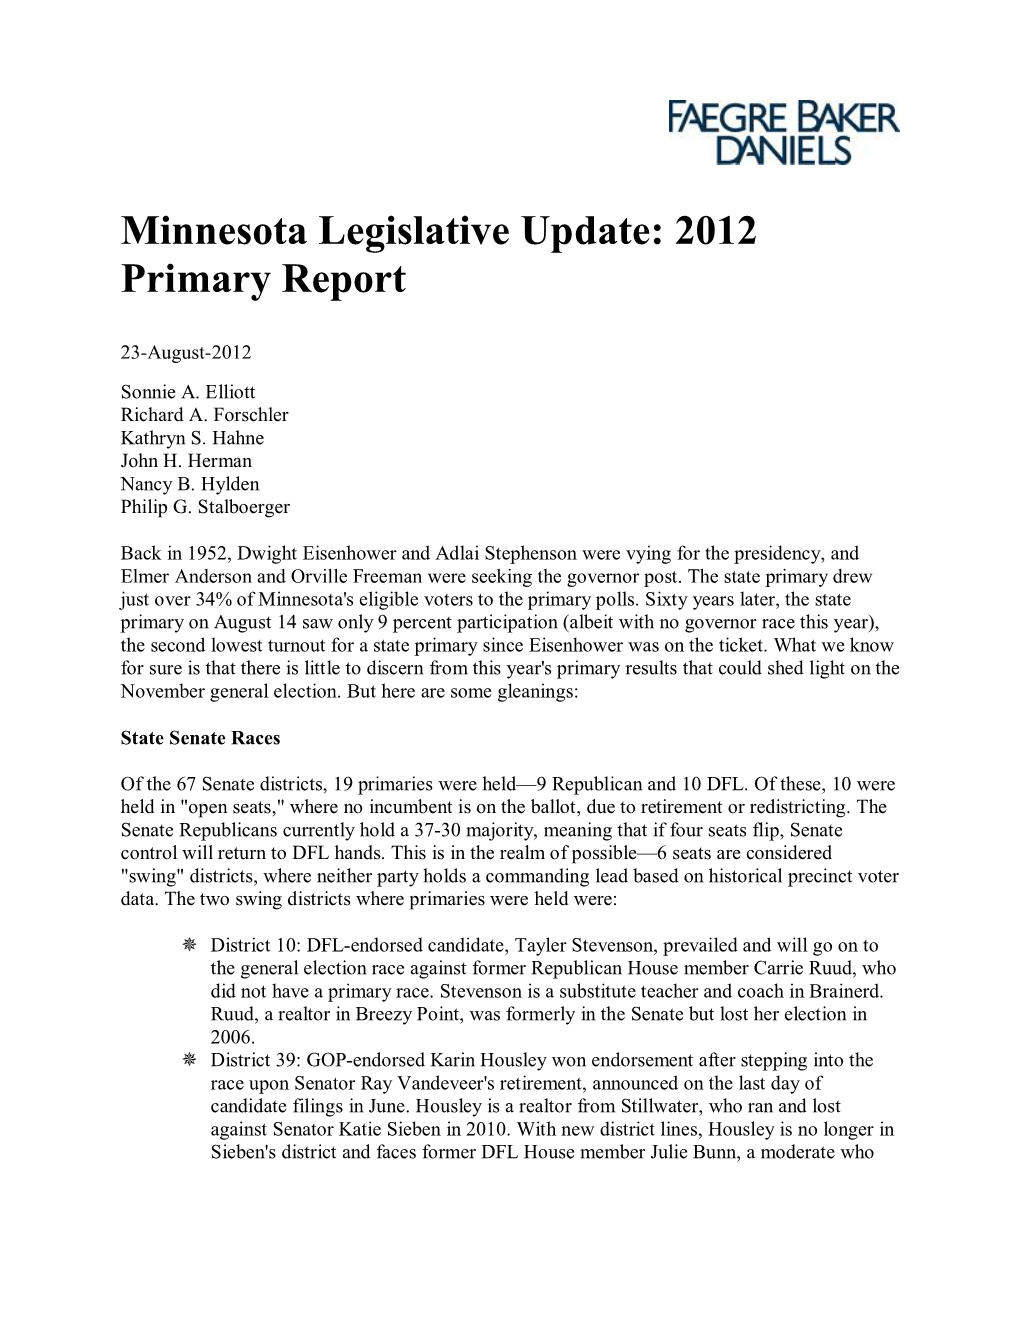 Minnesota Legislative Update: 2012 Primary Report